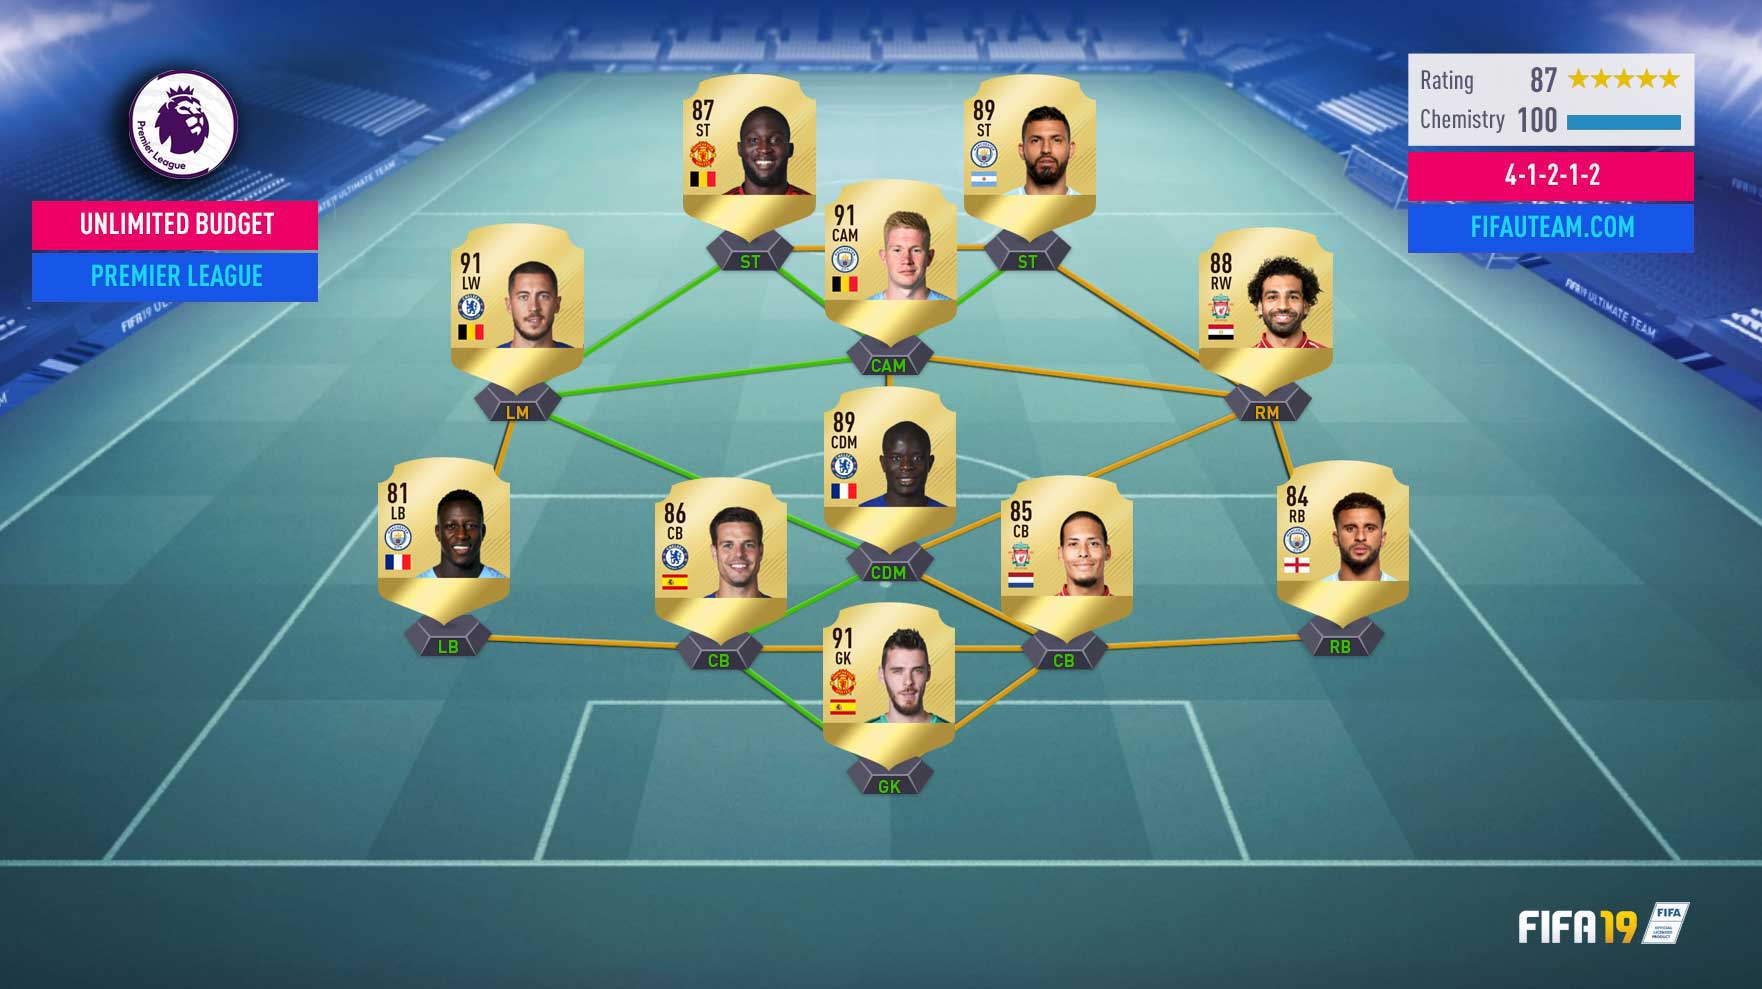 FIFADog - FIFA 19 Ultimate Team